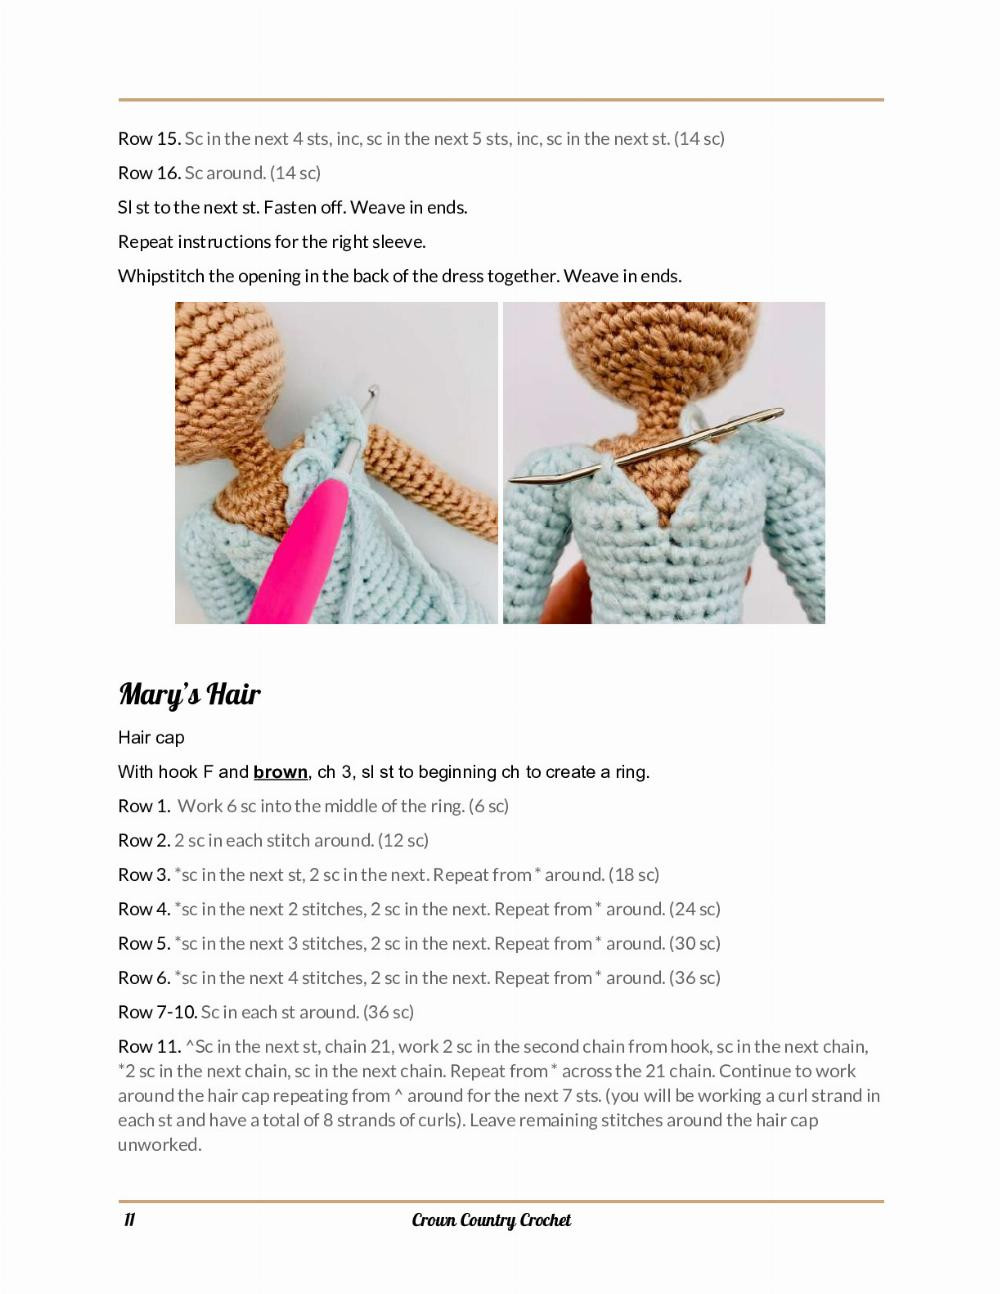 mary crochet pattern